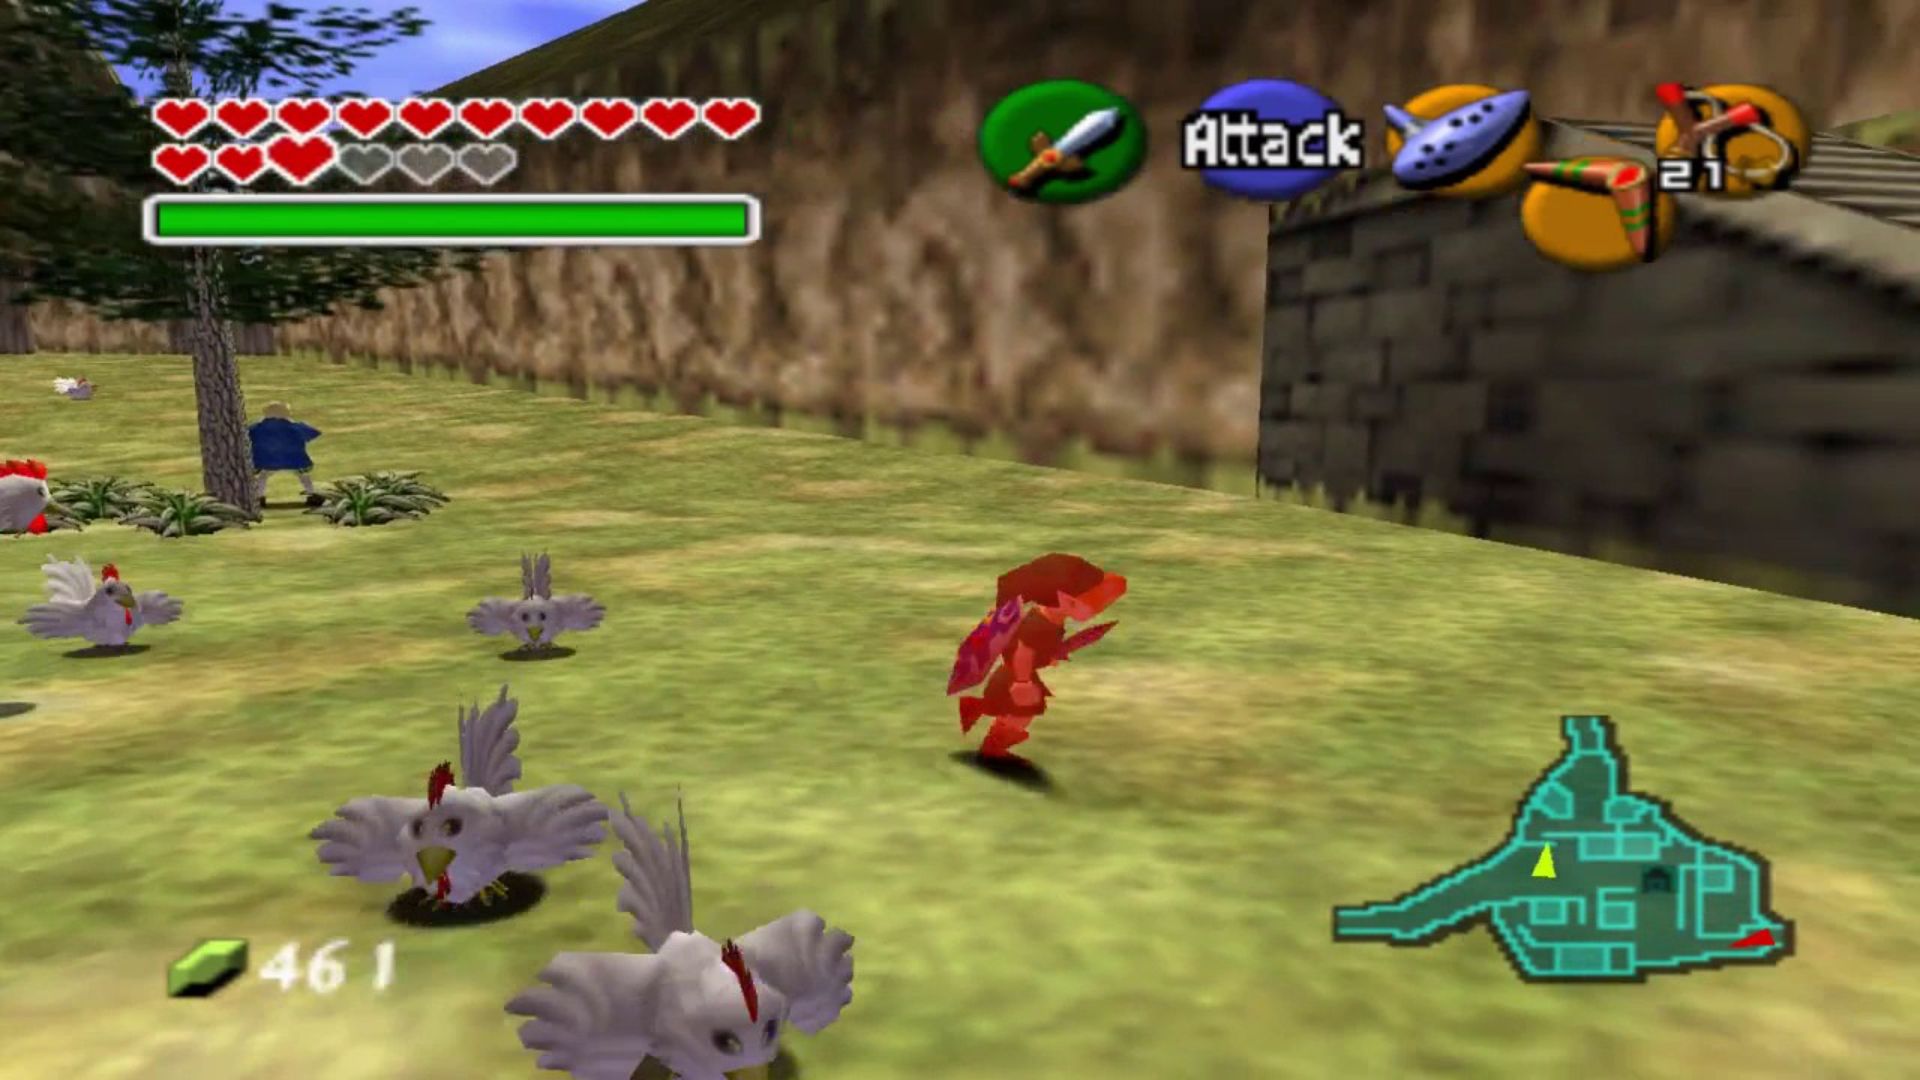 Legend Of Zelda Link getting attack by Cuckoos